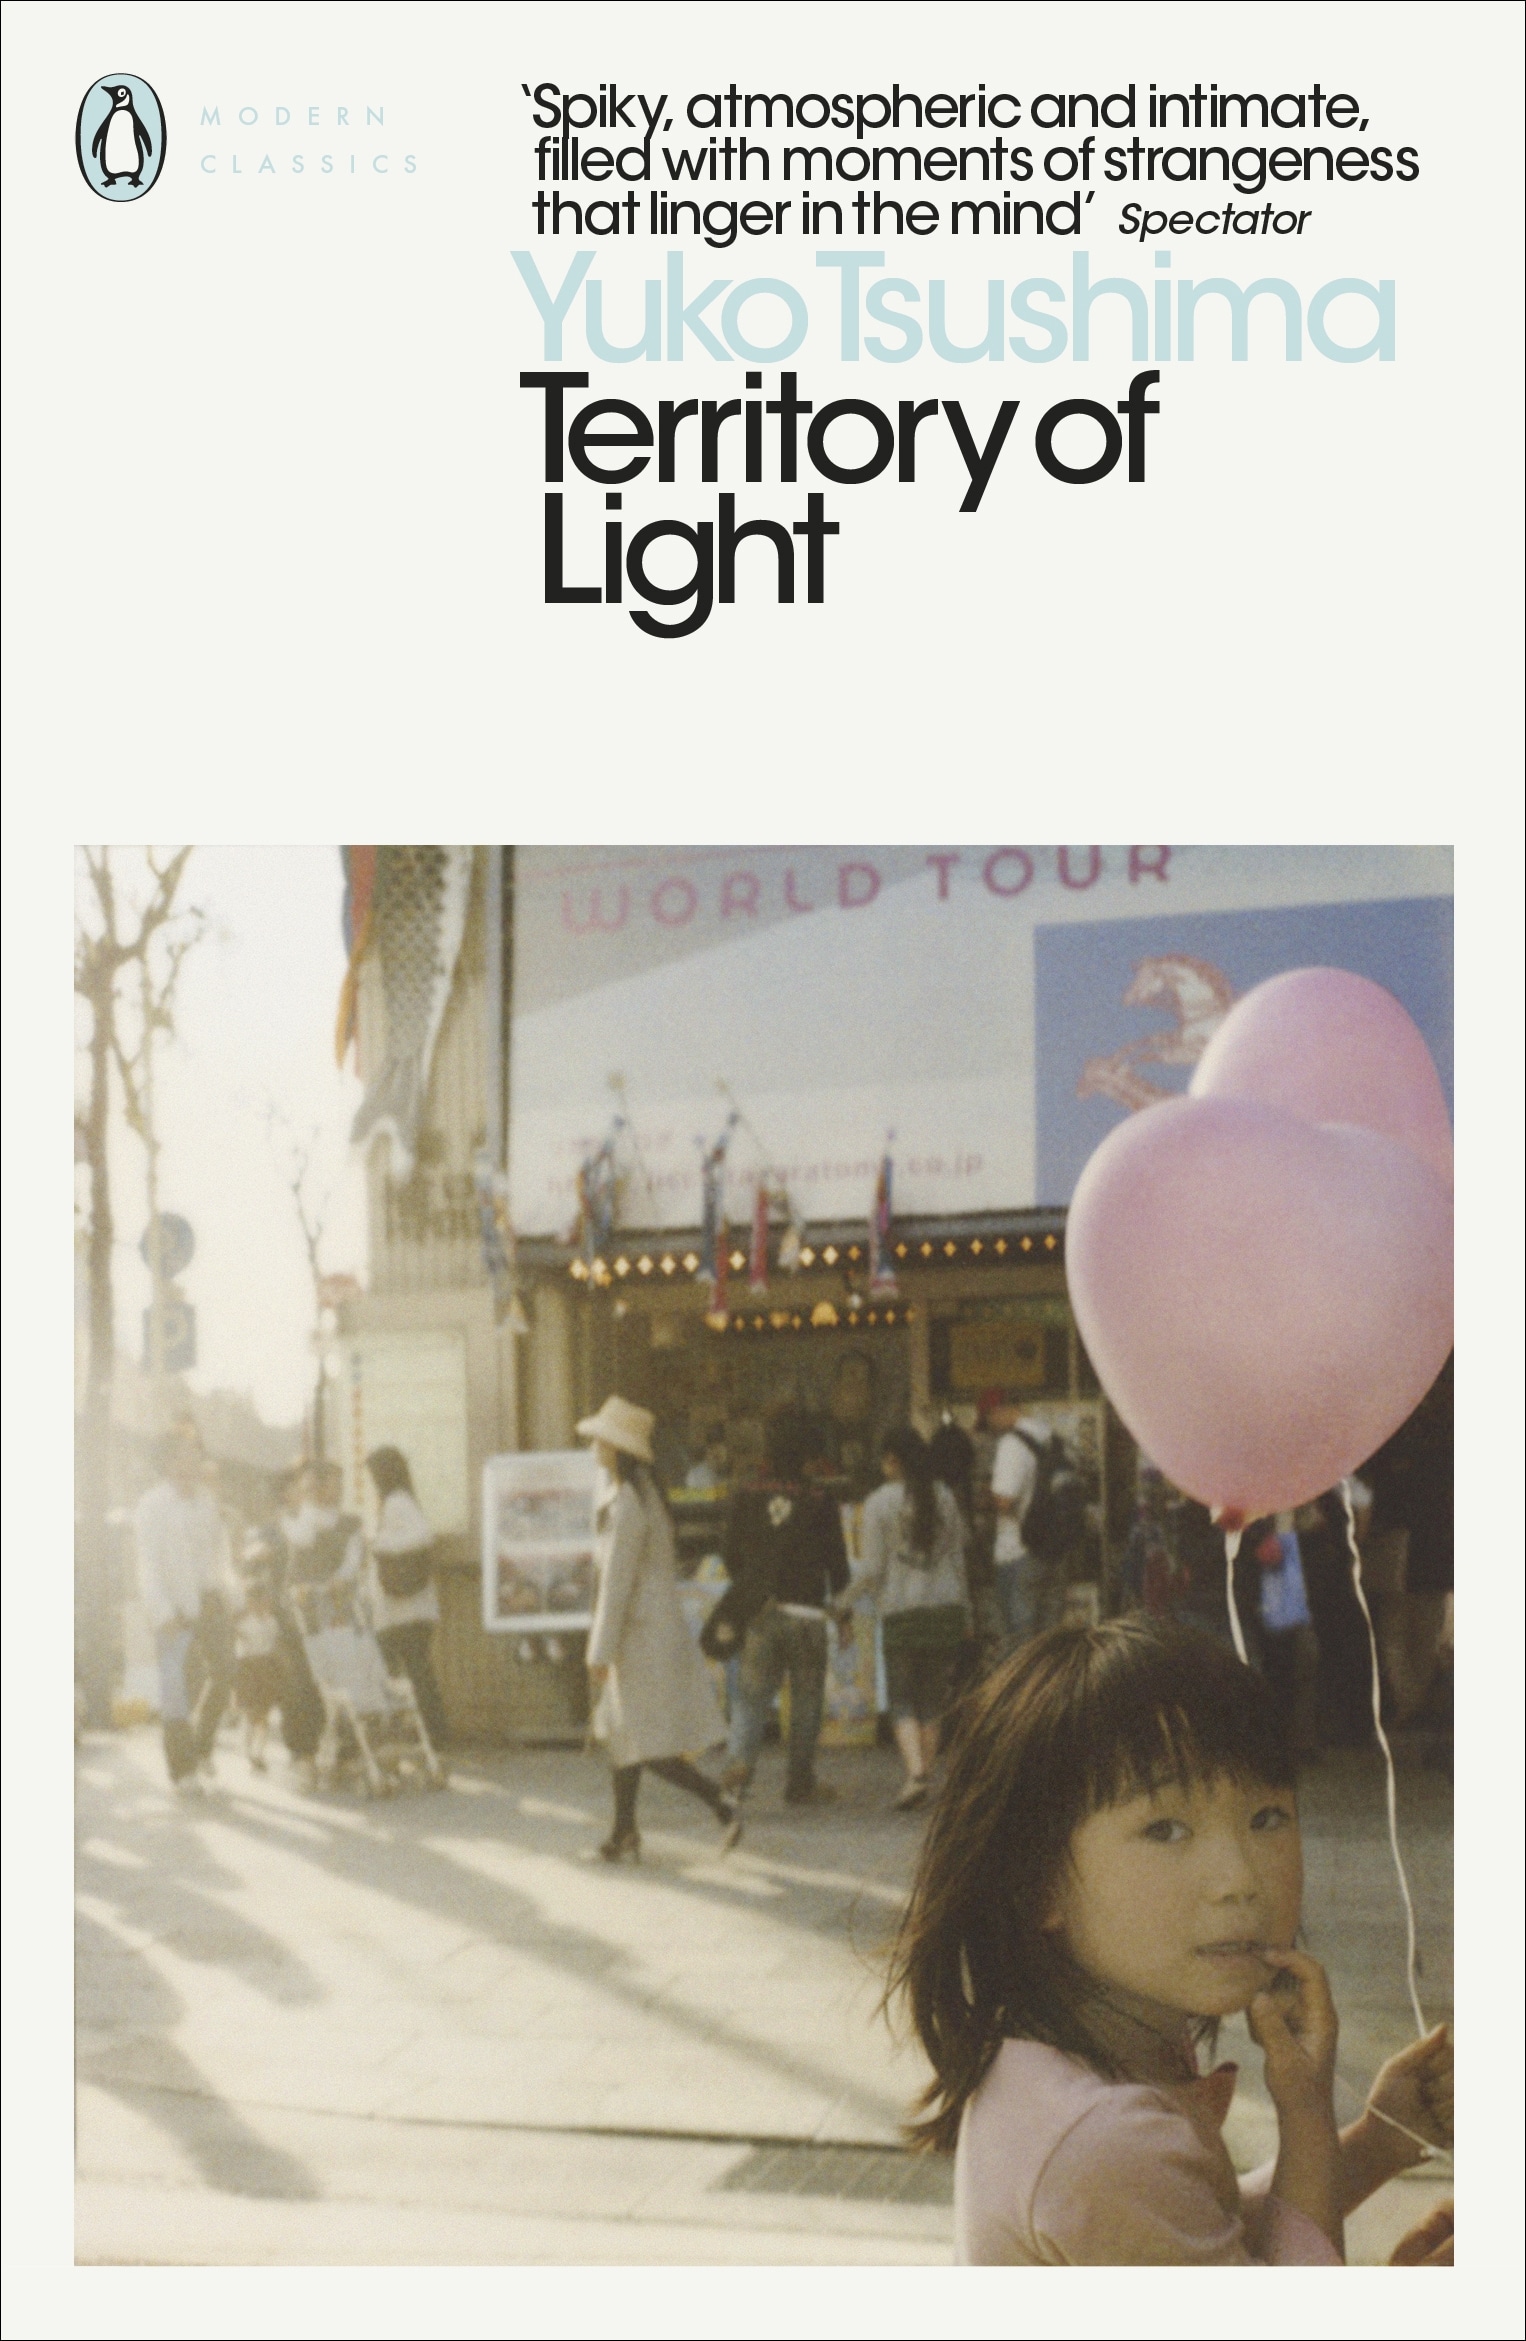 Book “Territory of Light” by Yuko Tsushima — April 4, 2019